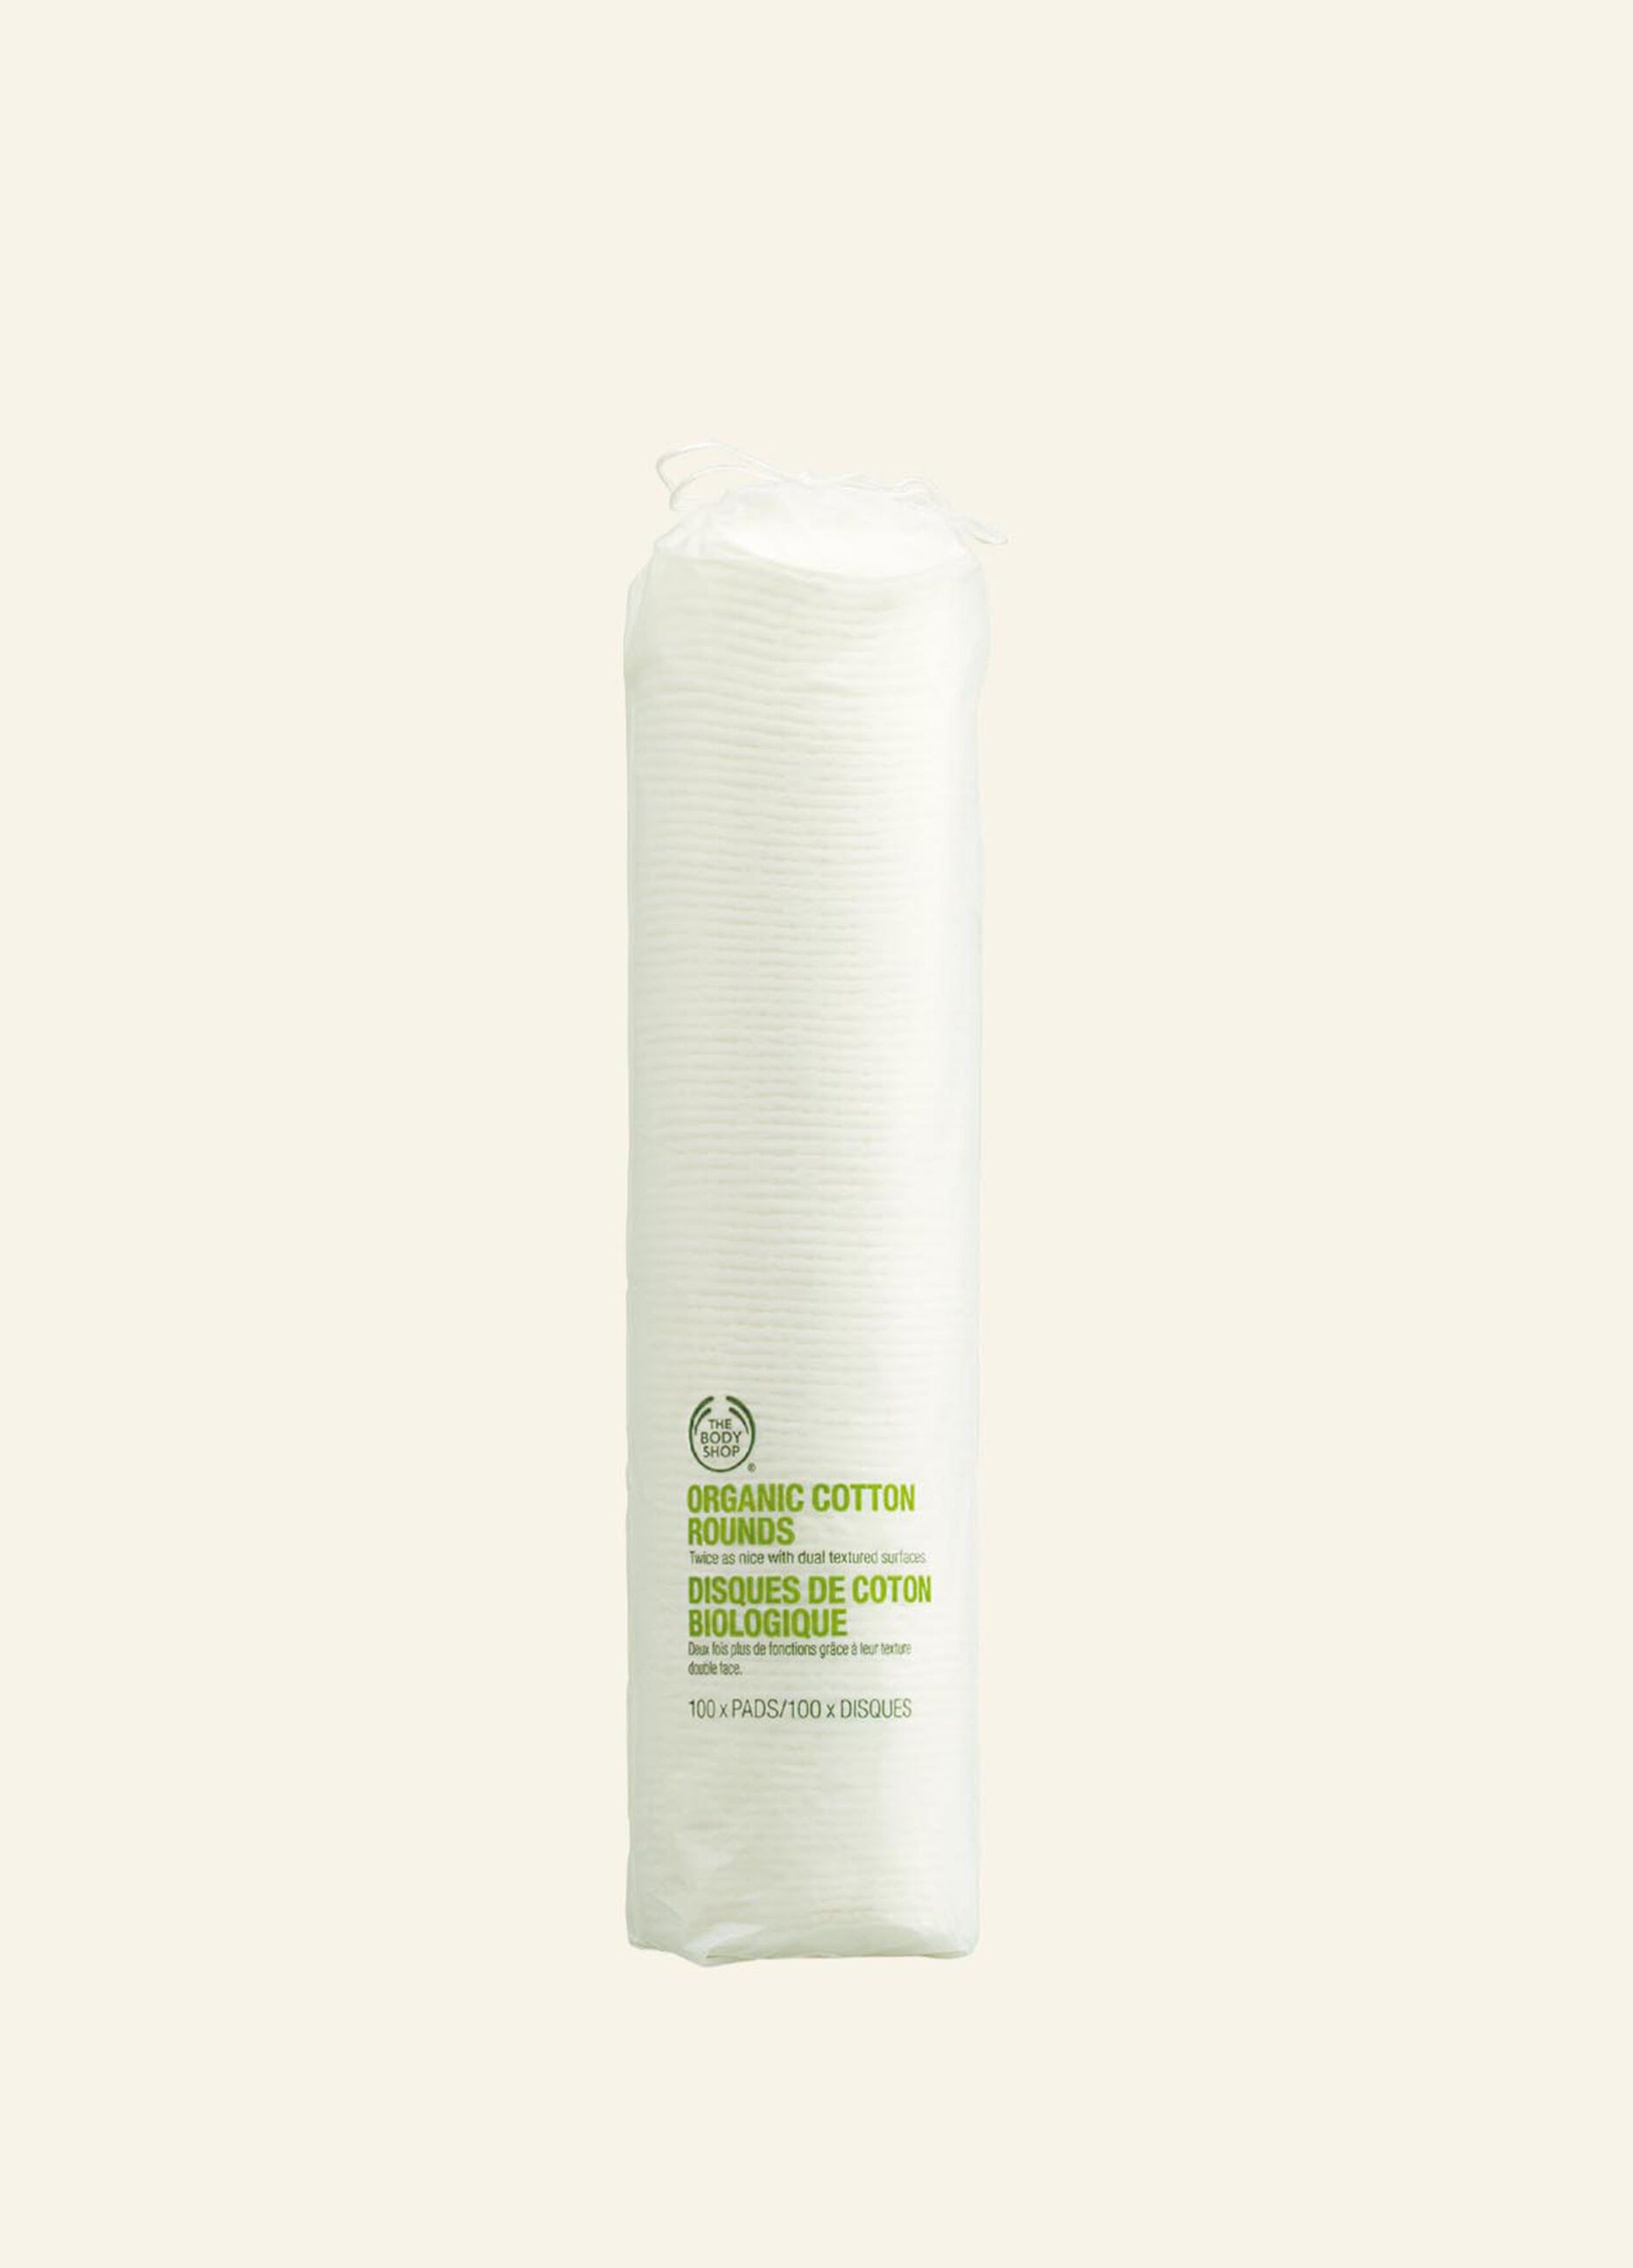 The Body Shop organic cotton rounds 100 pieces